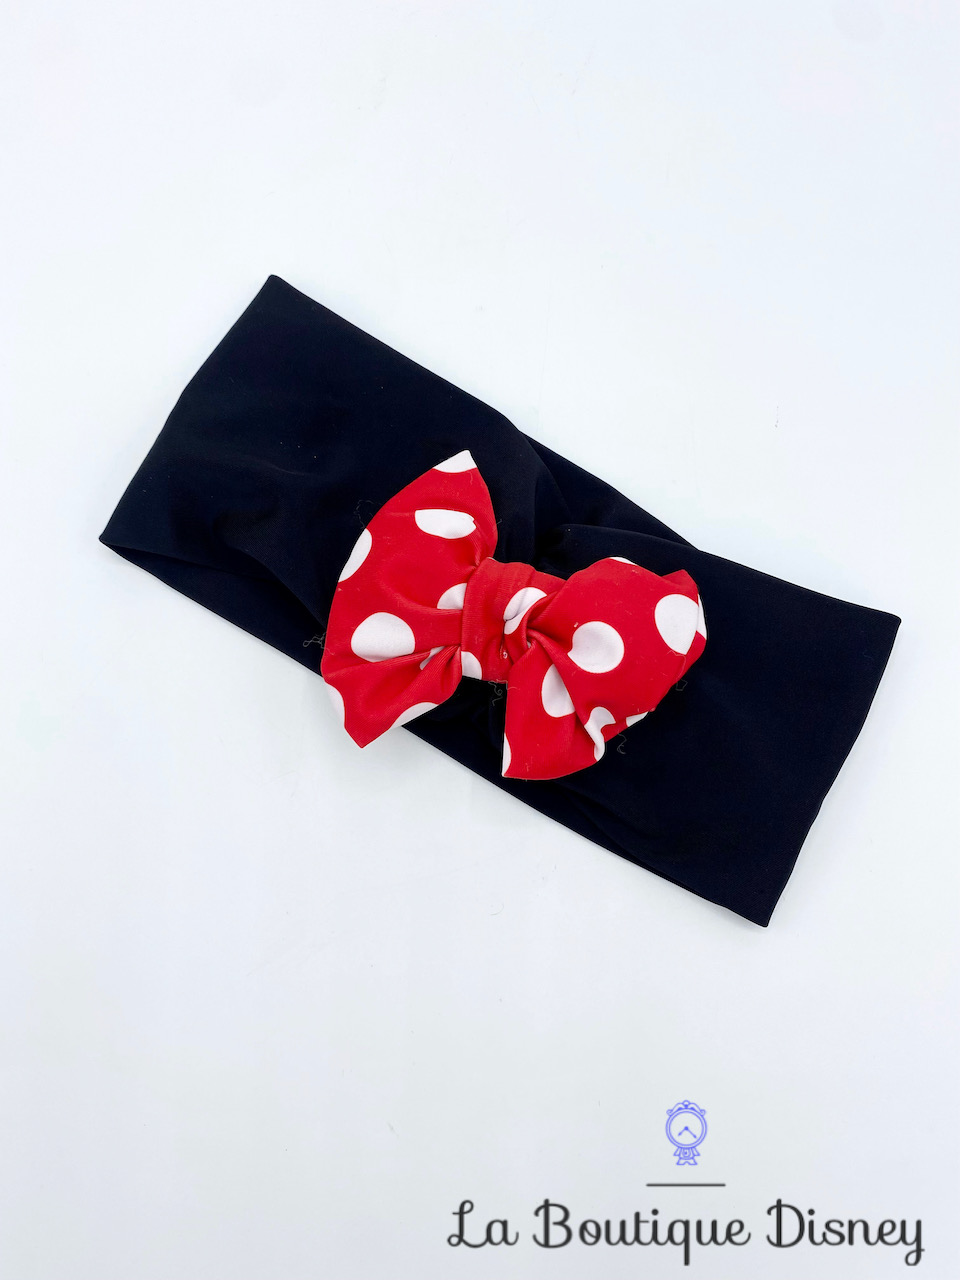 Bandeau Minnie Mouse Disney Store taille 4 ans noeud rouge pois serre tête cheveux